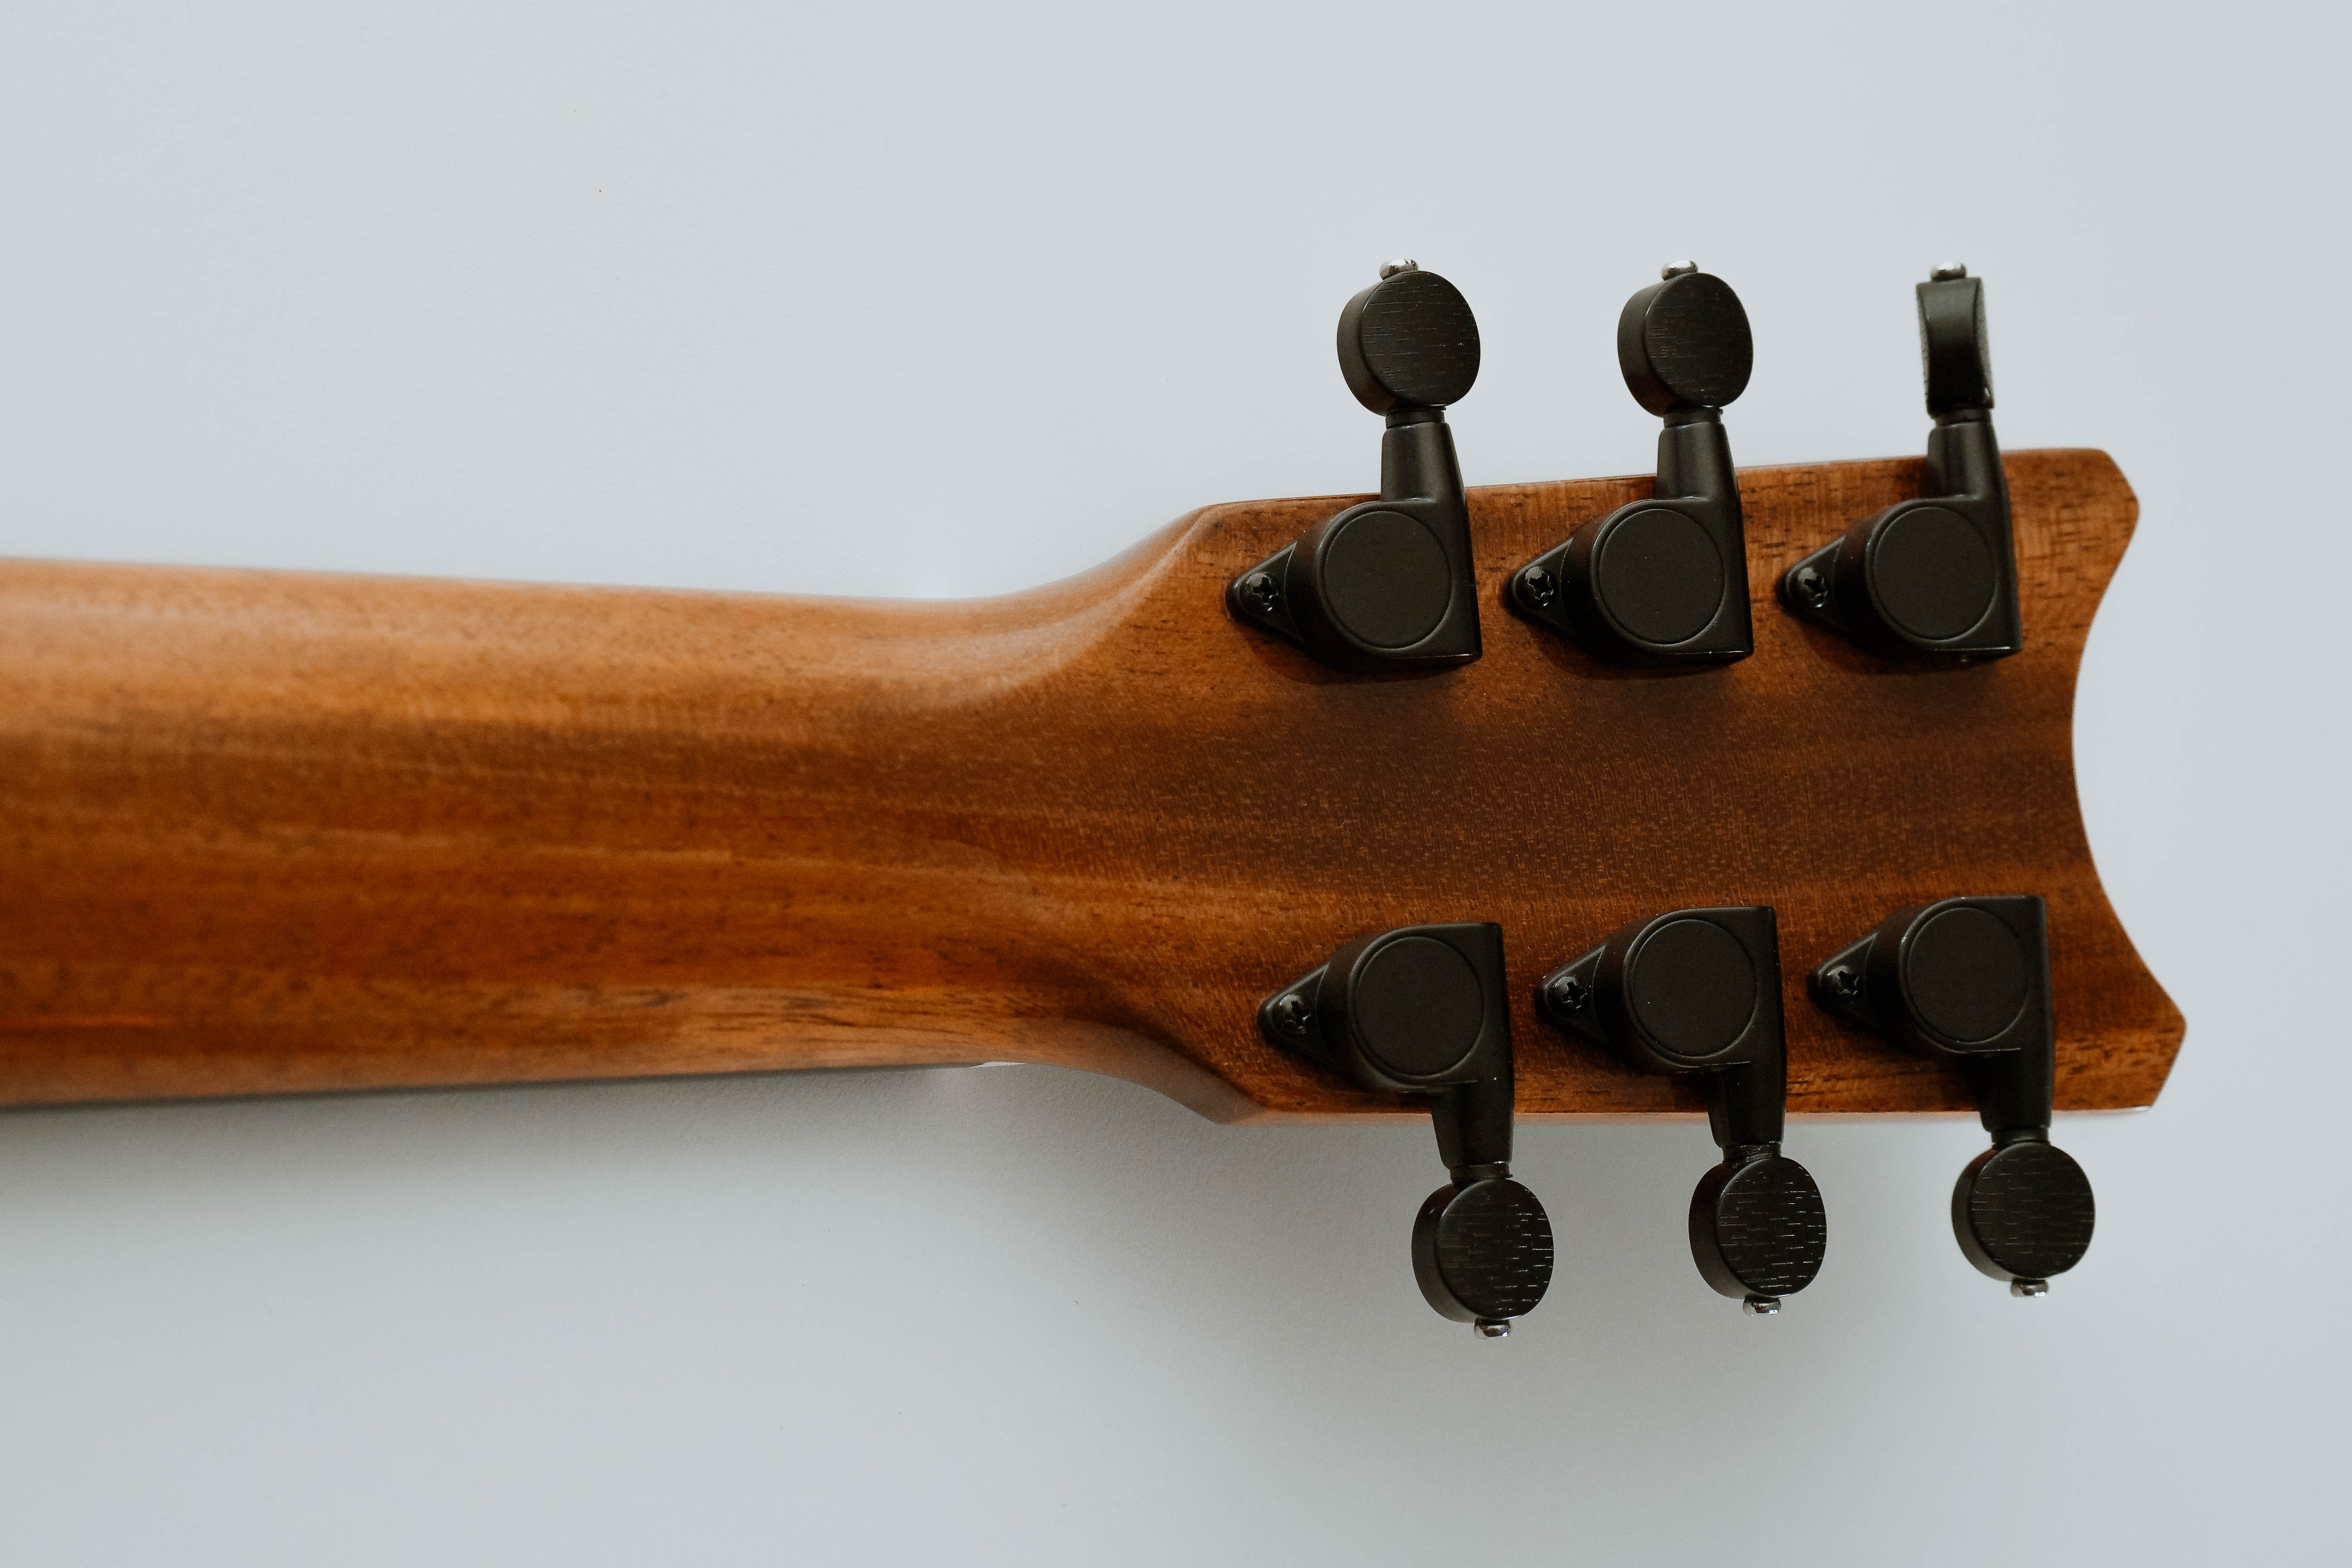 Romero Creations RC-DHo6-S-SM 6 Steel String Baritone Guitar/Guielele "RUI"